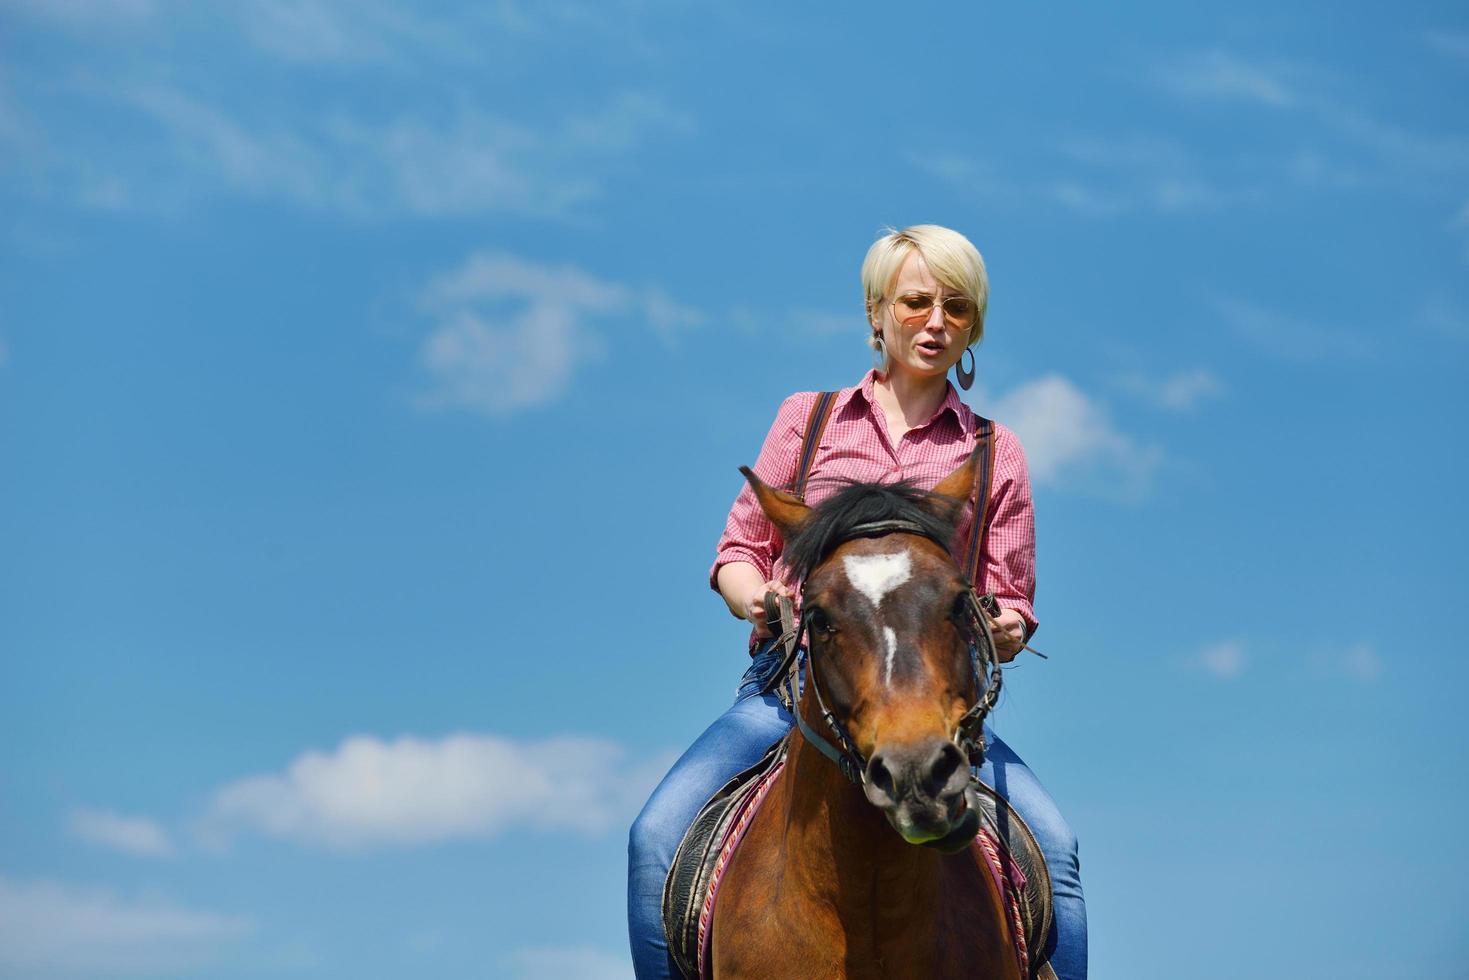 happy woman  on  horse photo